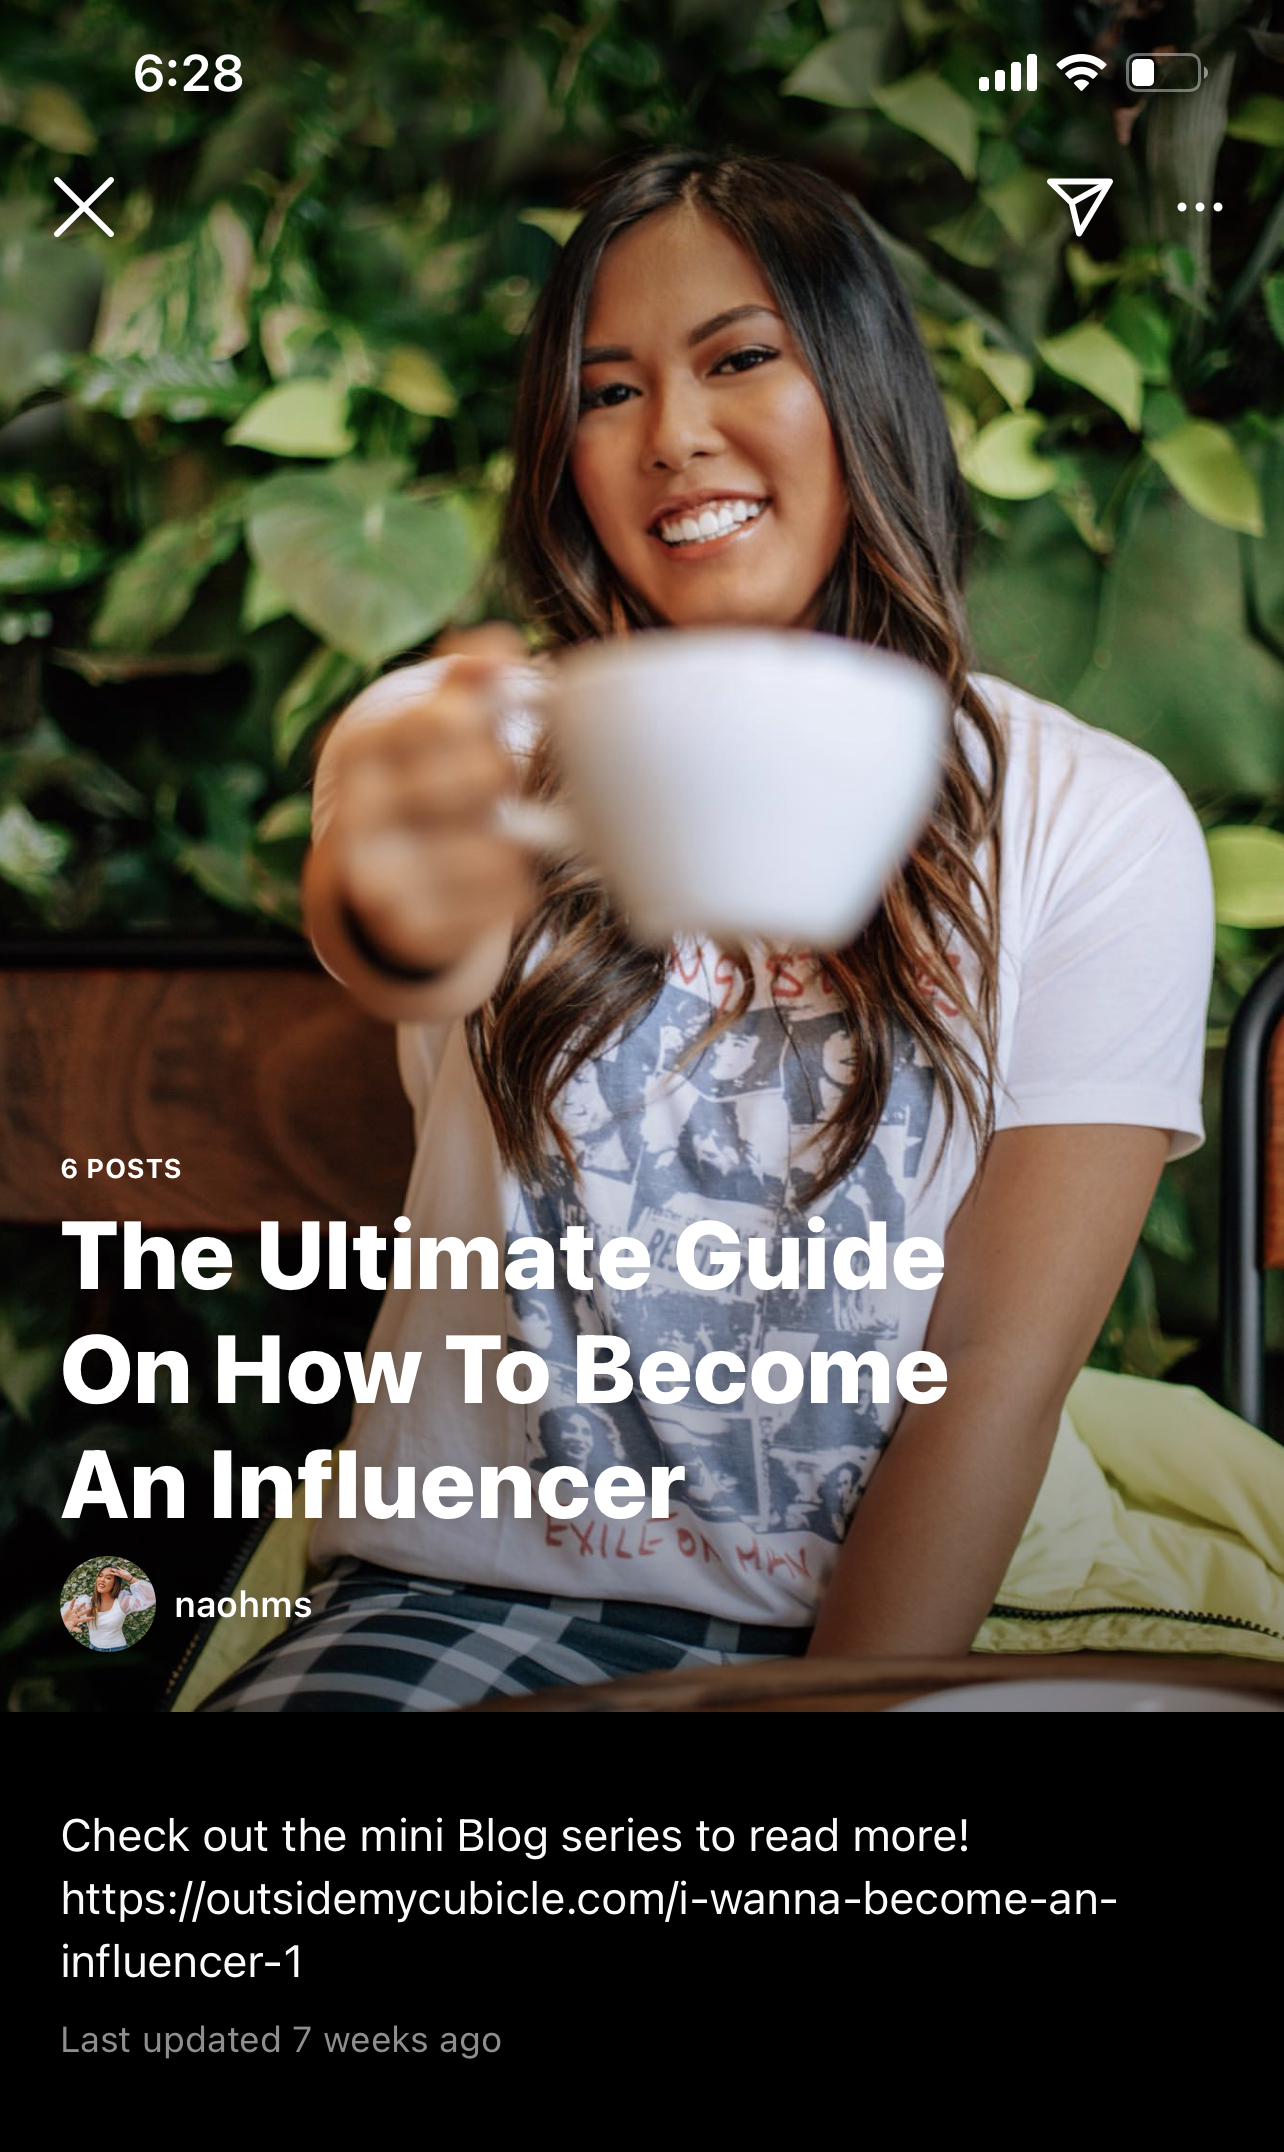 Influencer-Marketing-Trends-SEO-Instagram-Guides